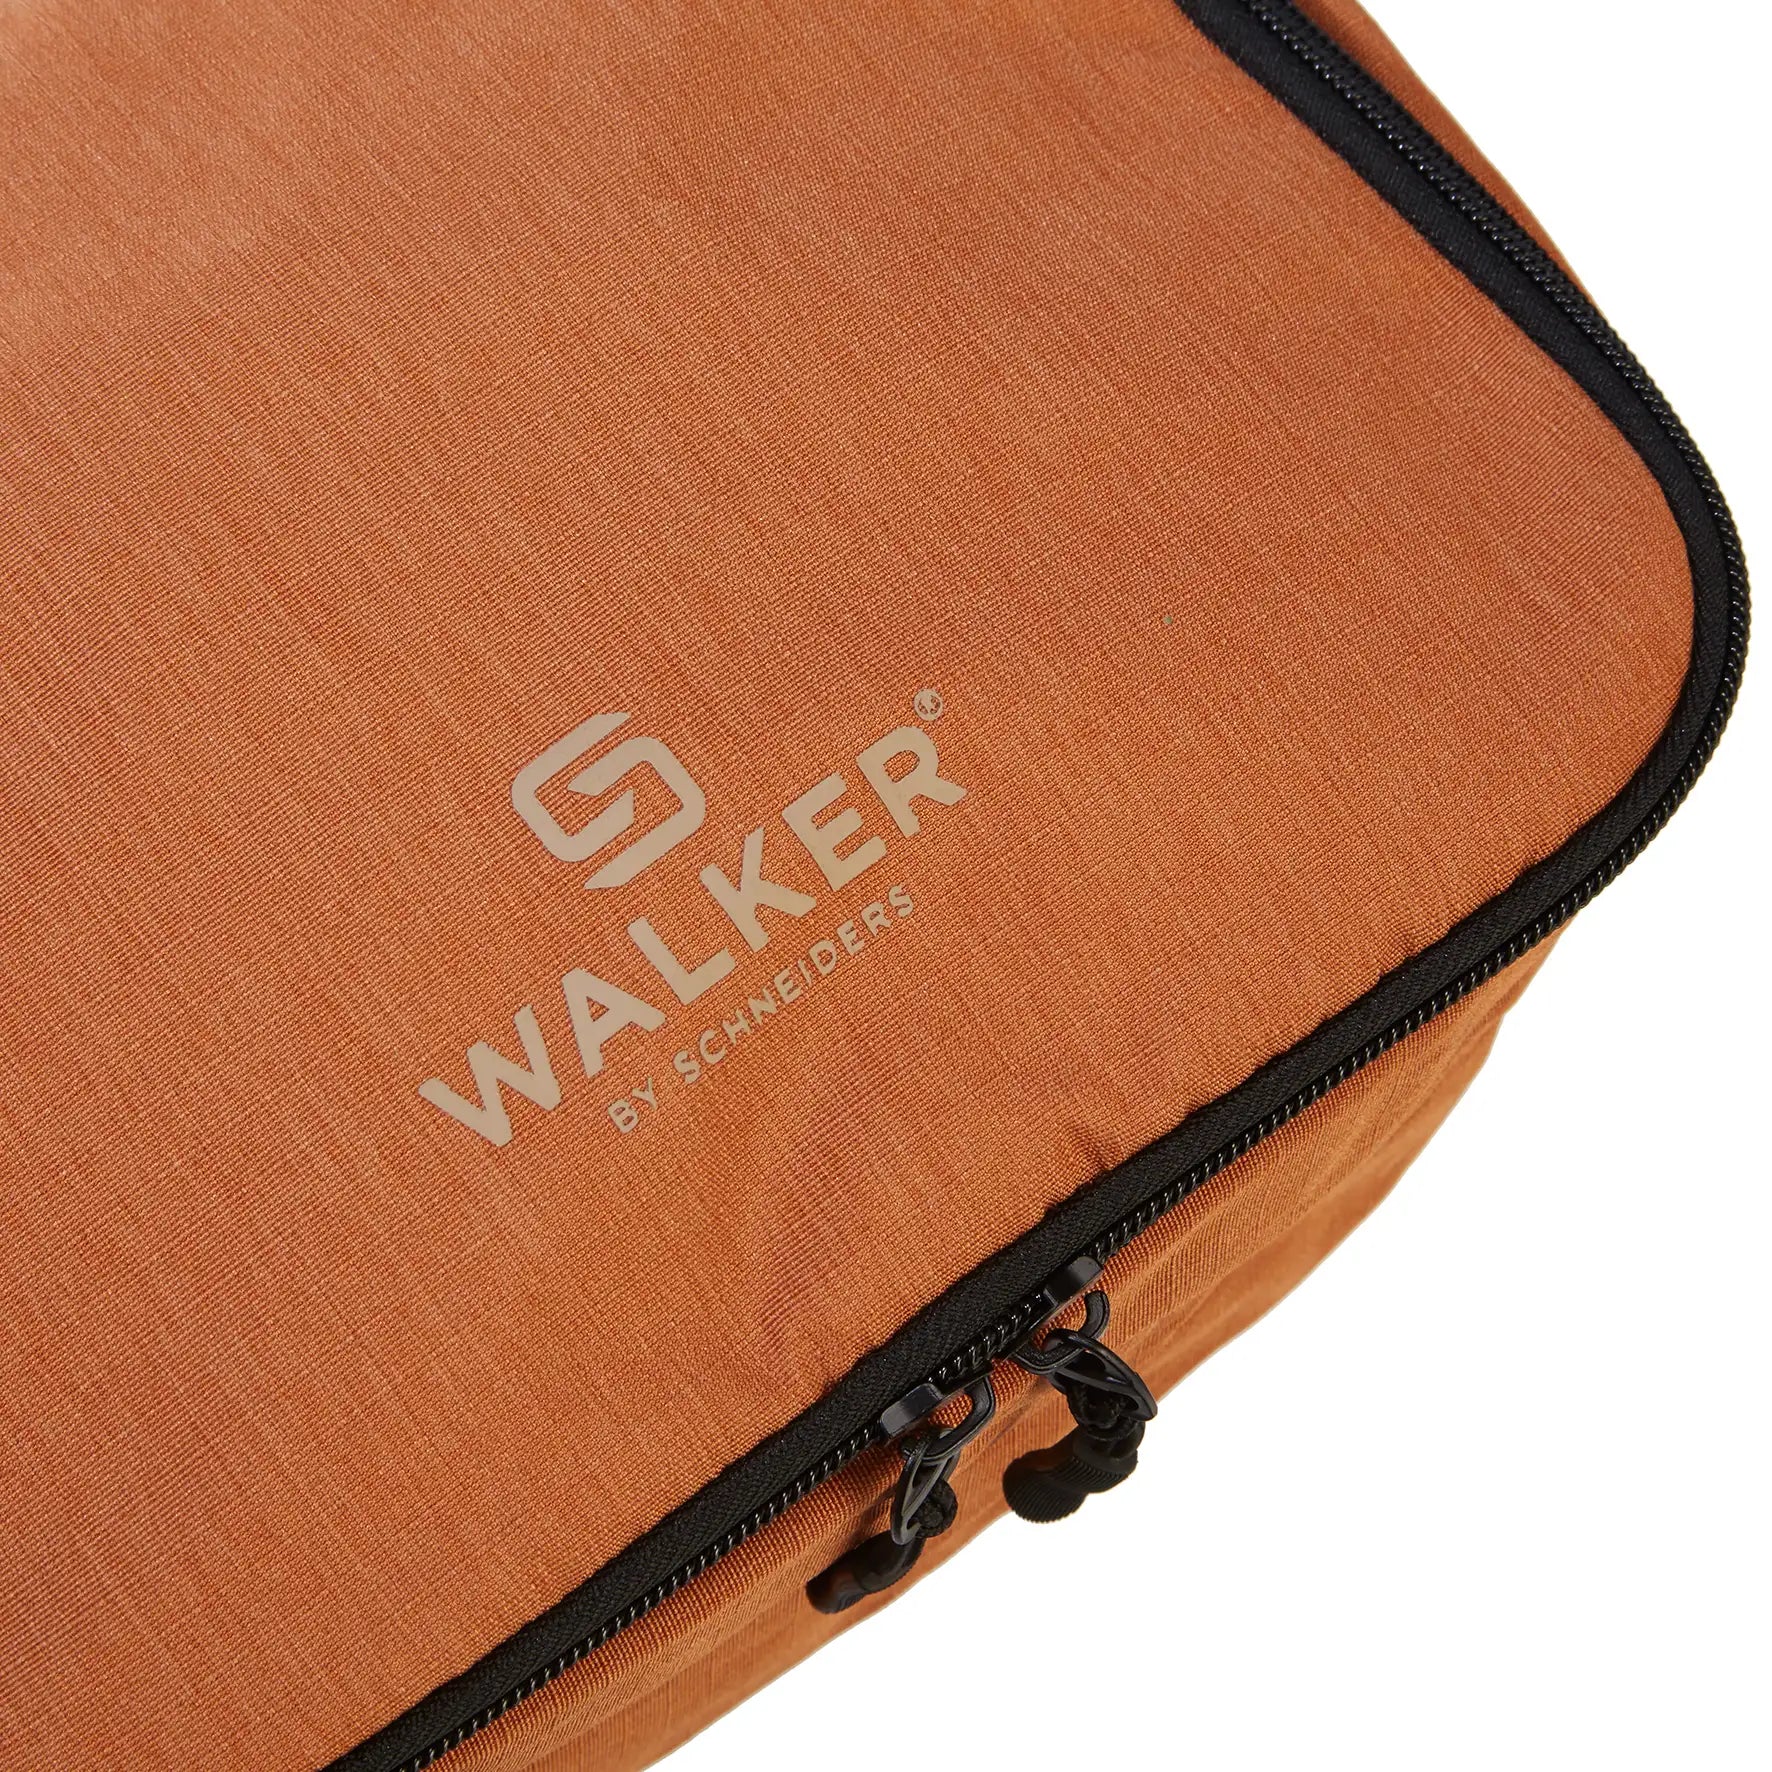 Walker Ibiza Toilet Bag 22 cm - Coconut